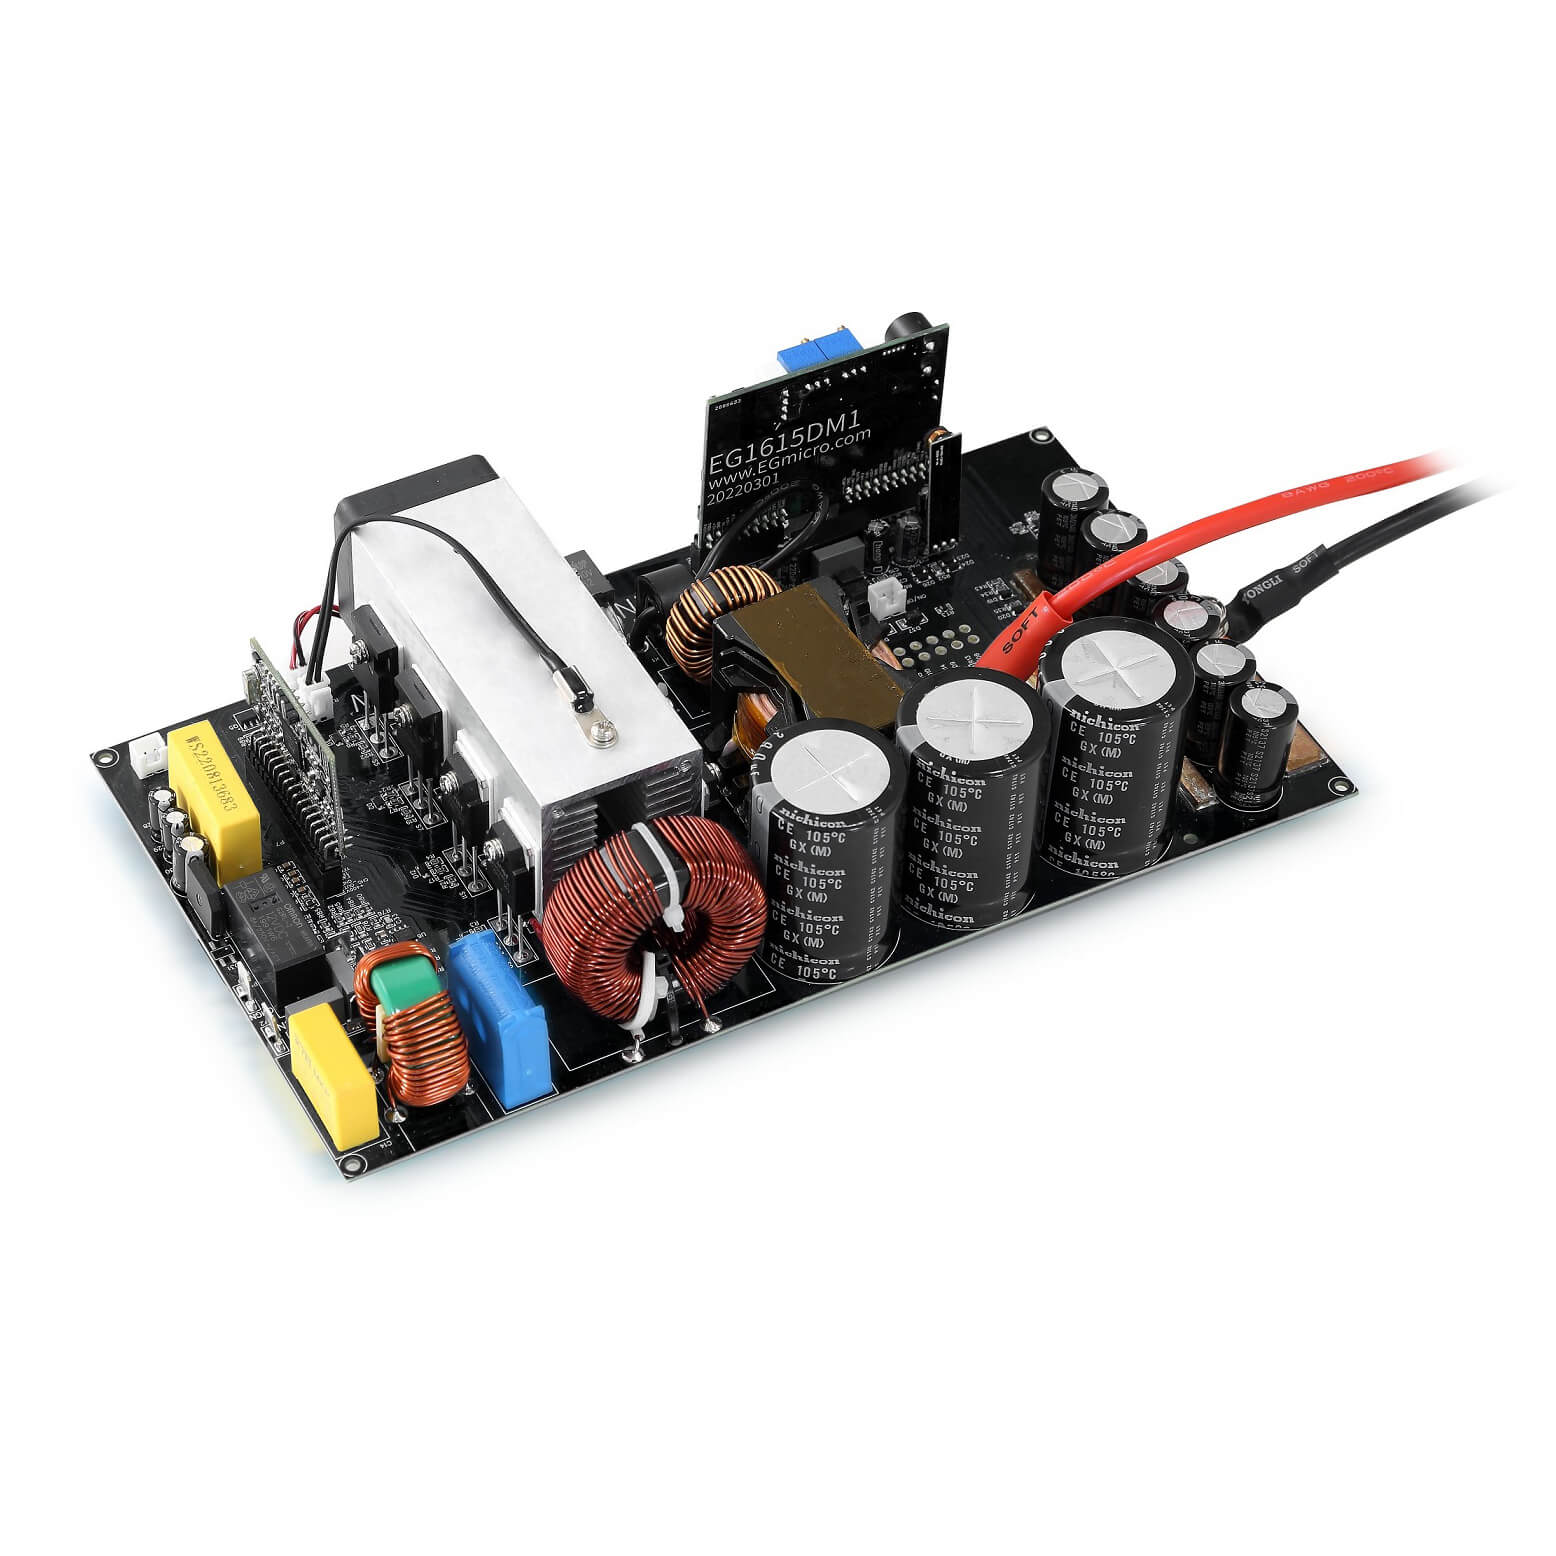 Energy storage inverter PCBA Printed circuit board assembly for energy storage inverters